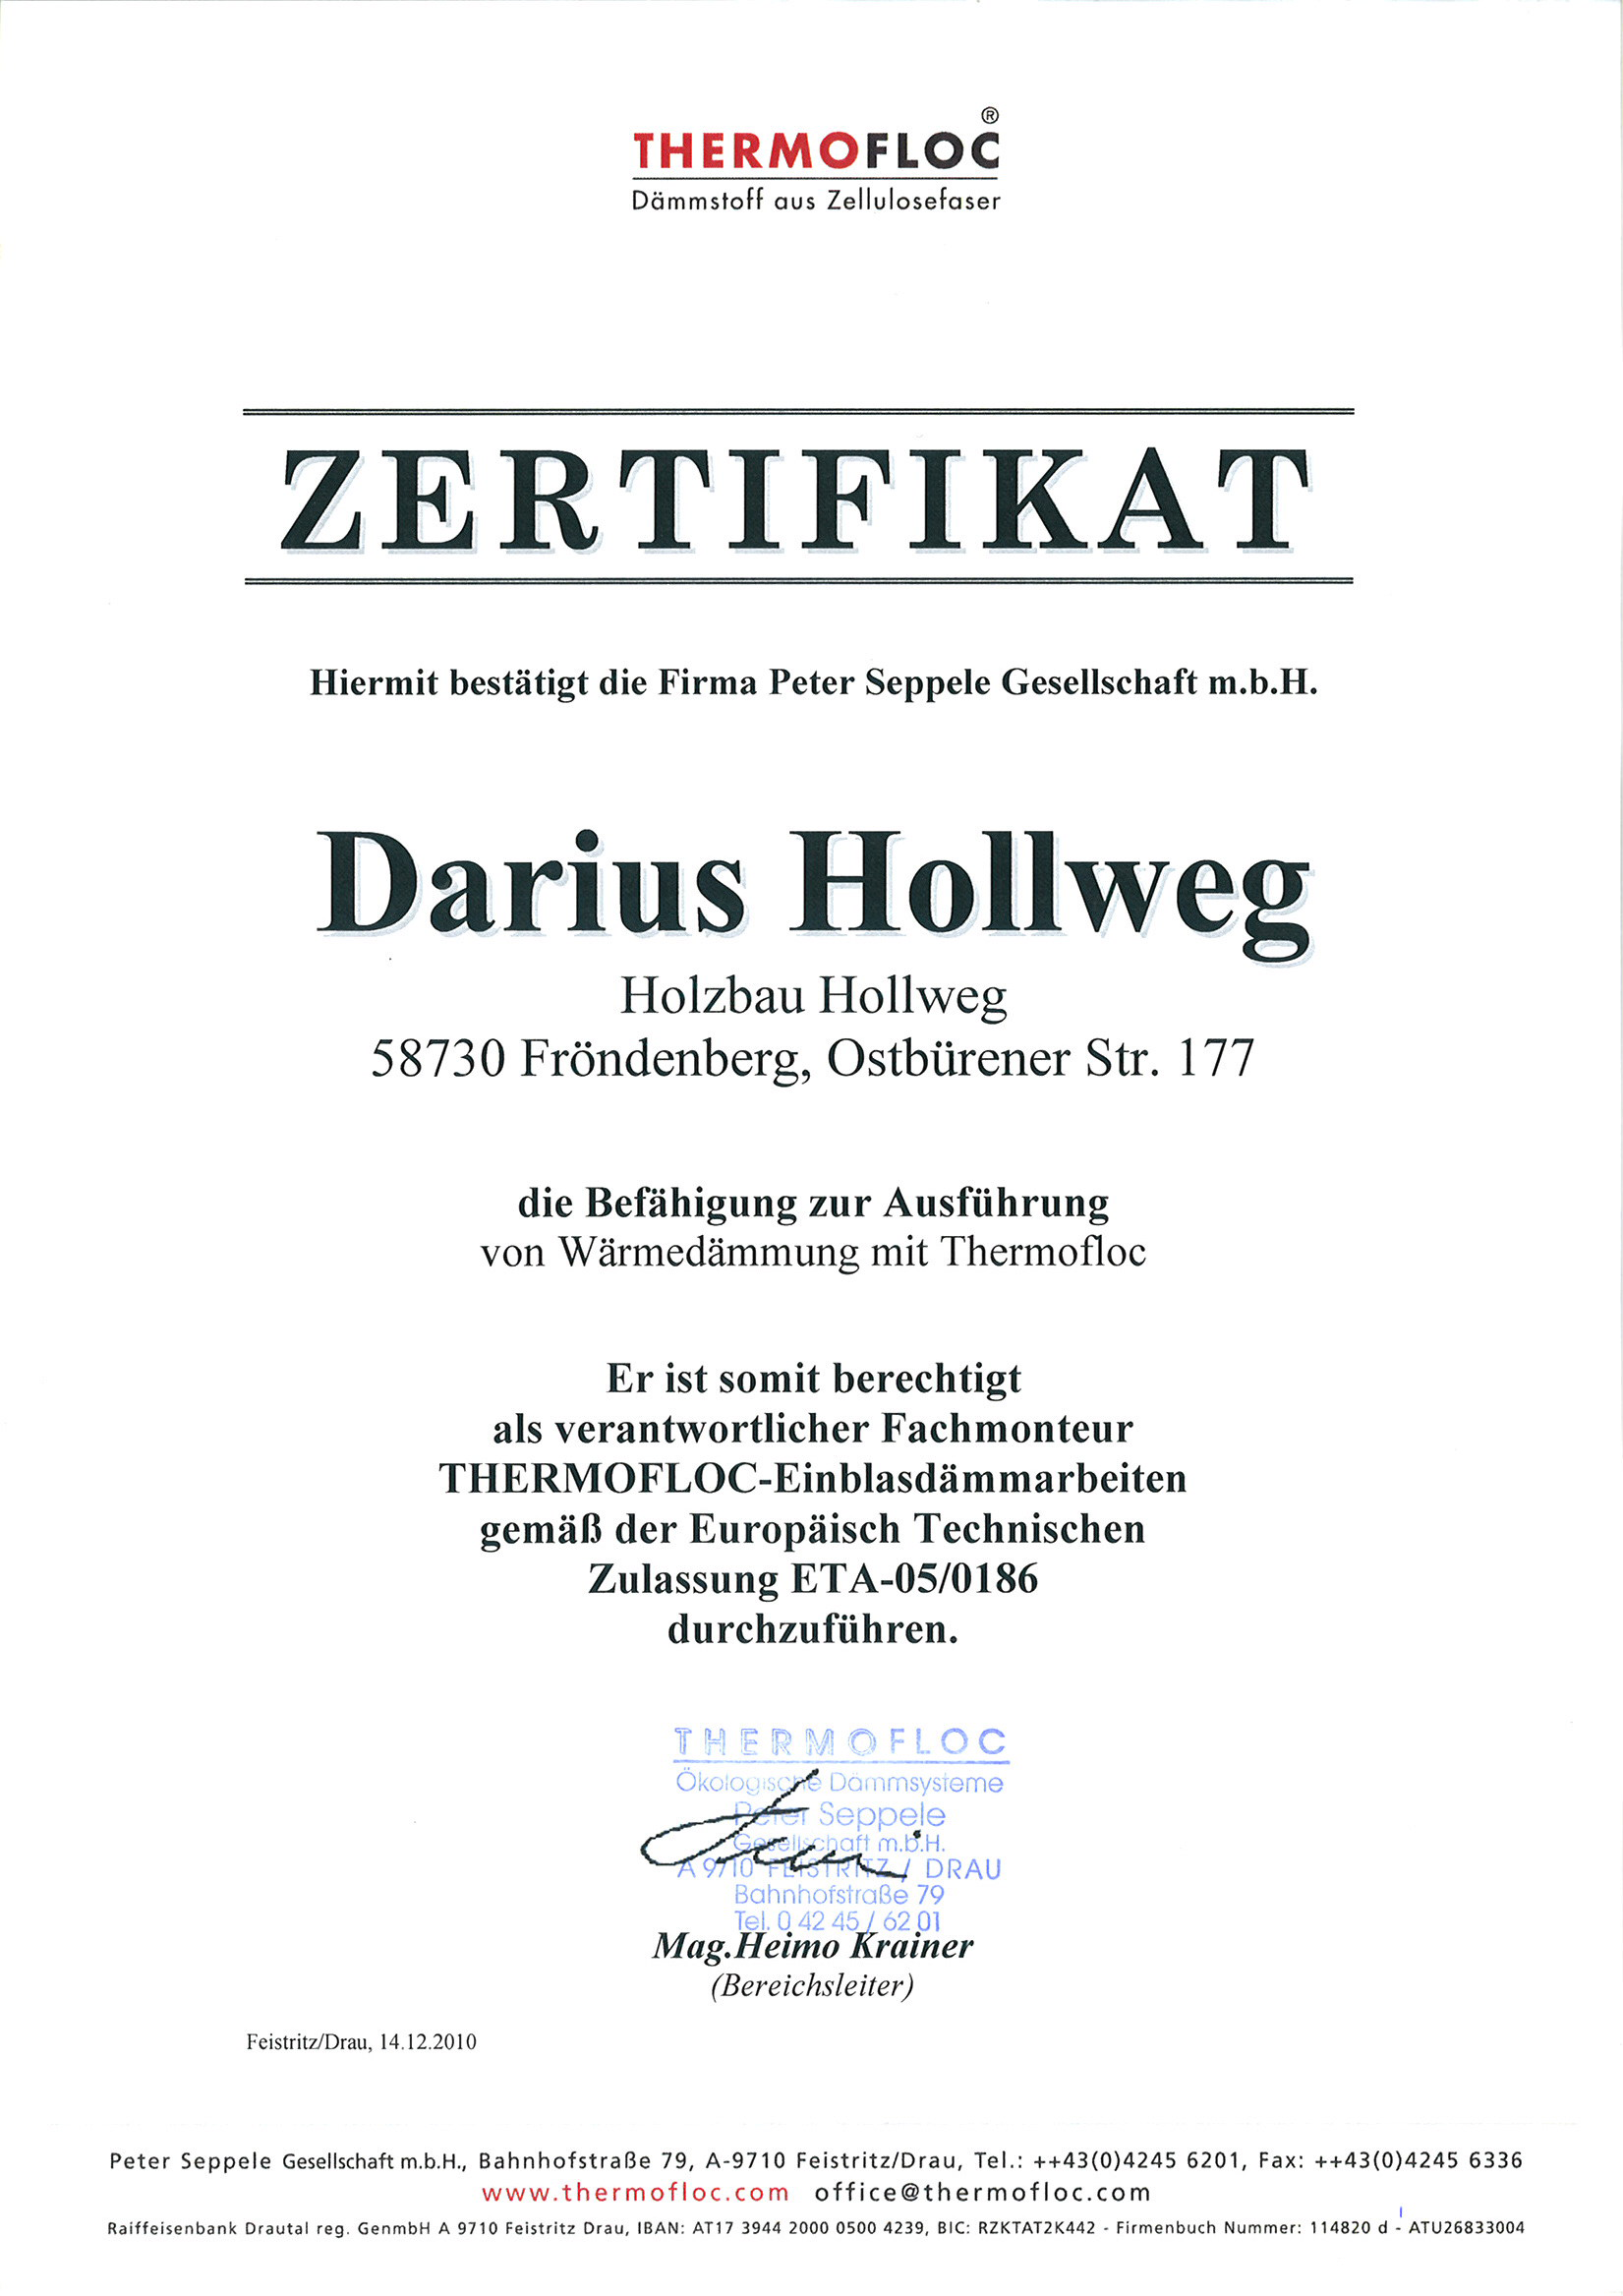 Zertifikat-Hollweg-Thermofloc